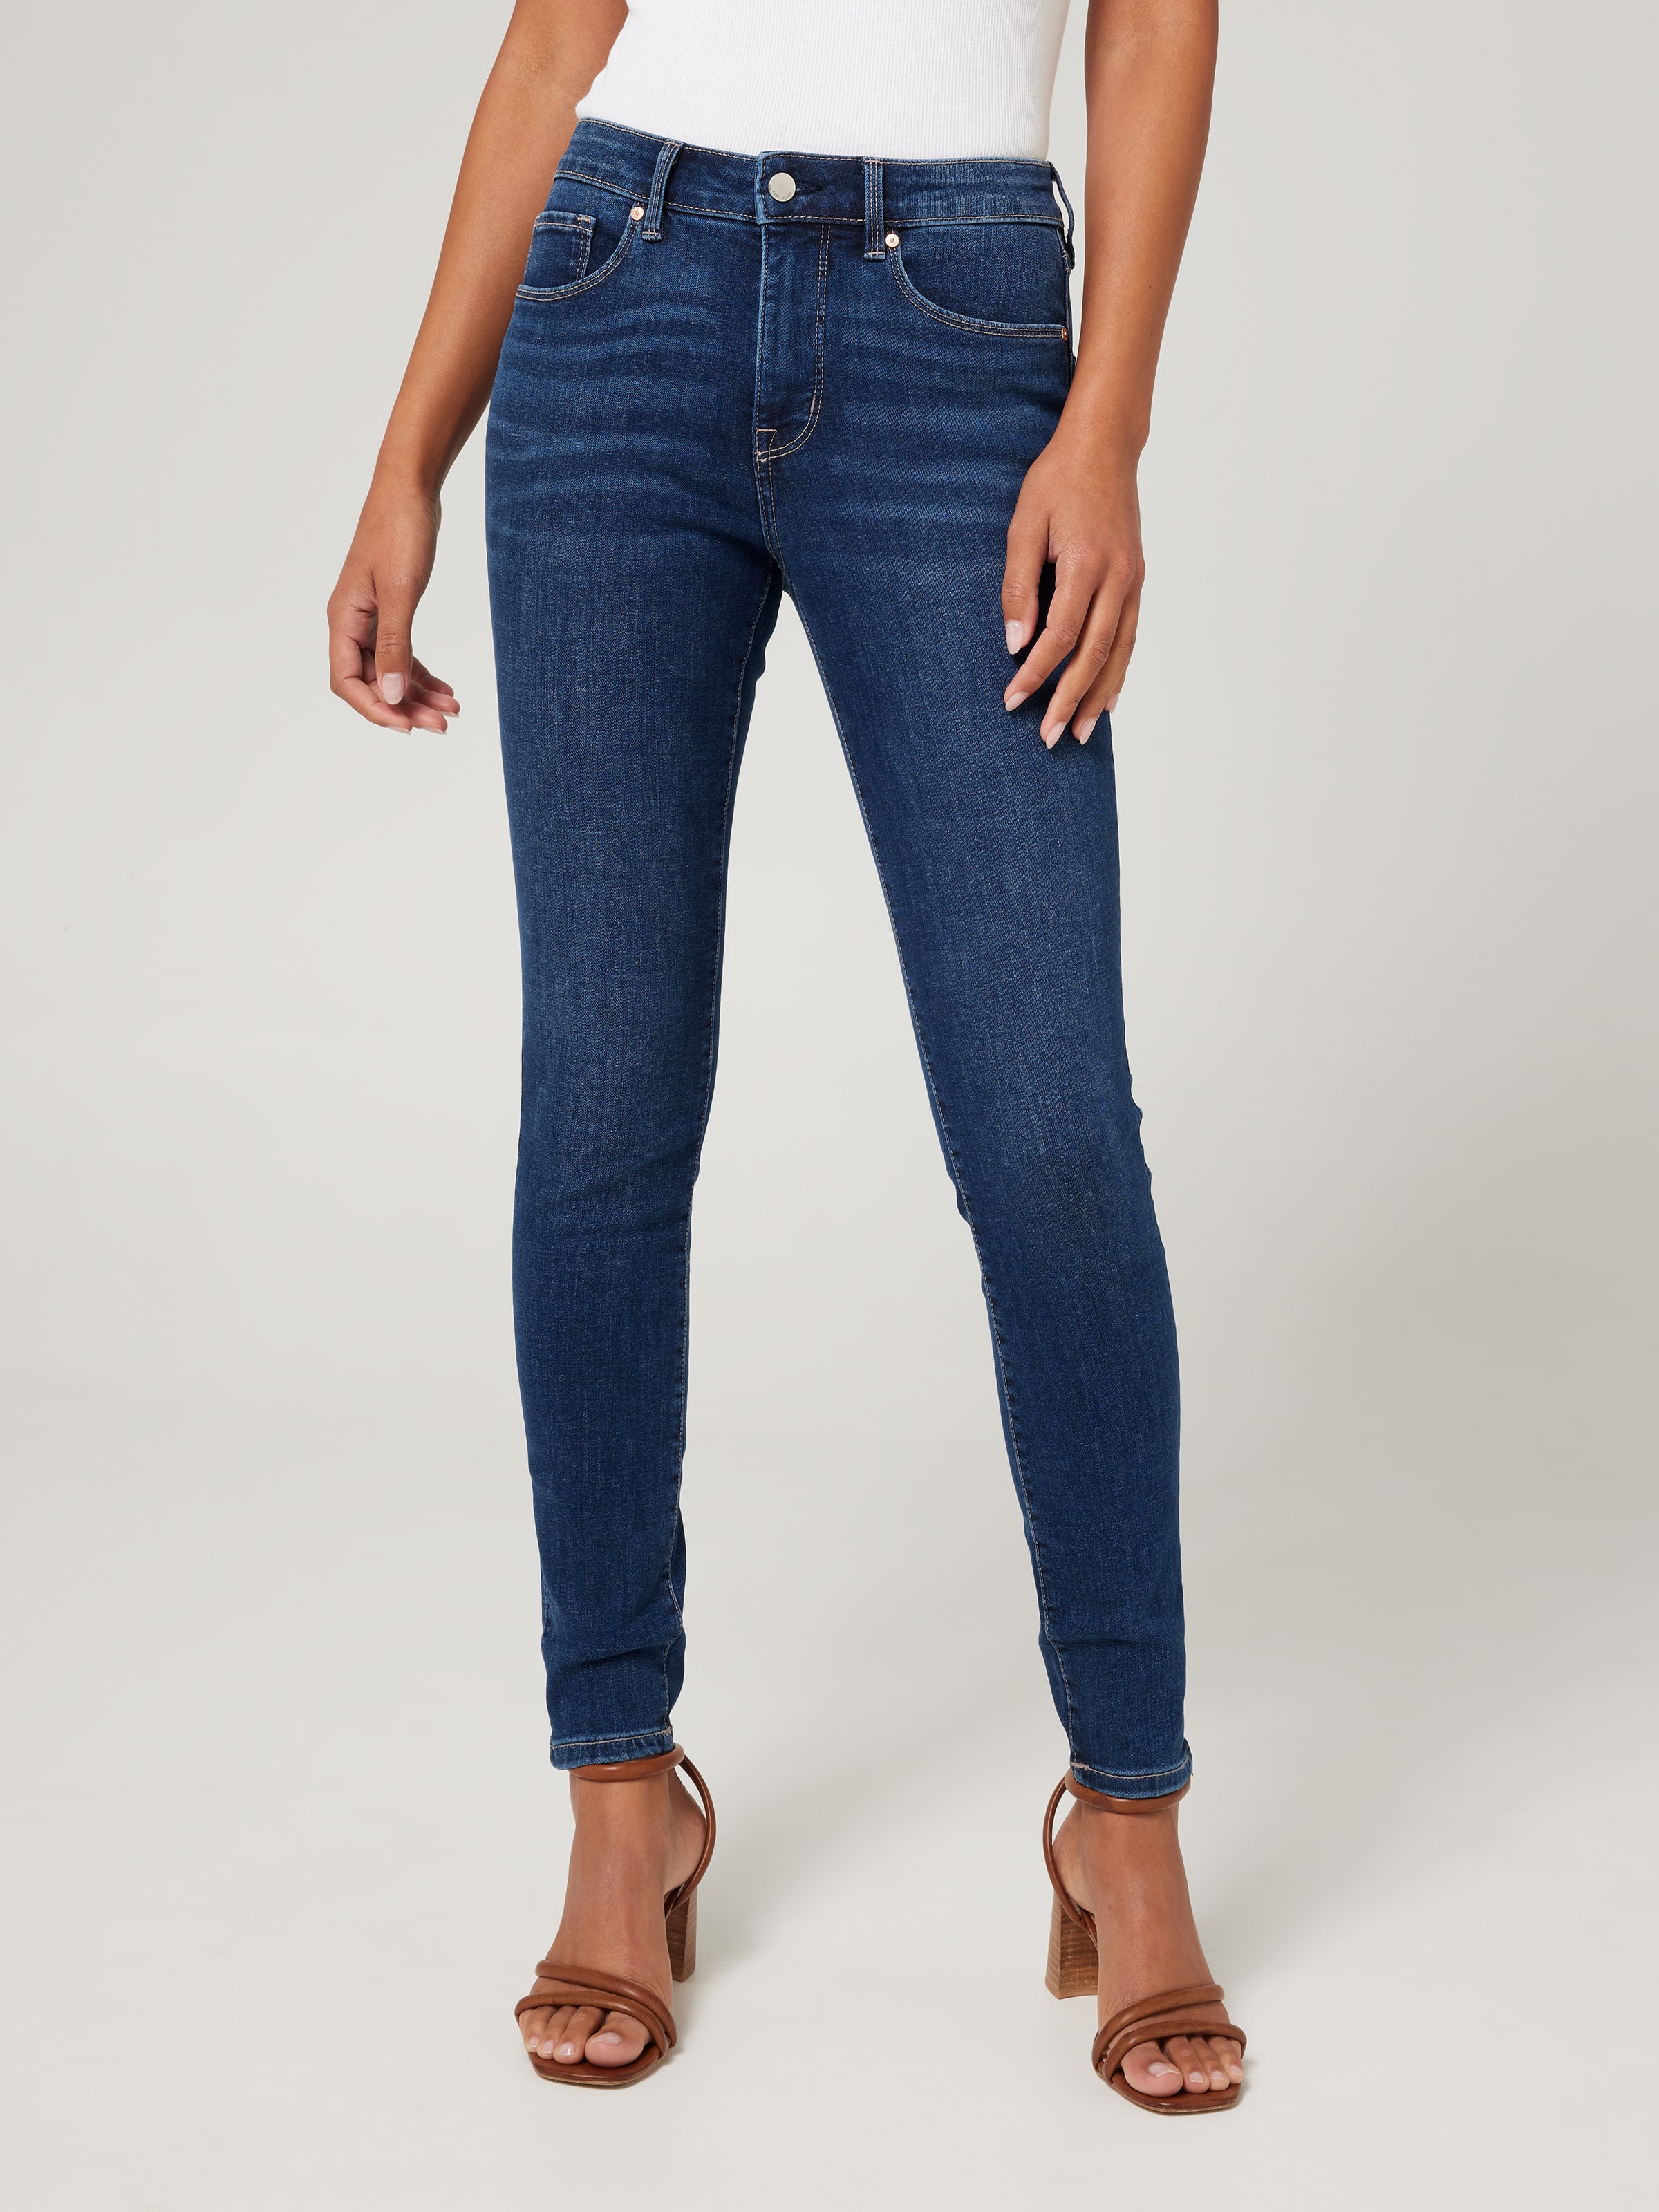 Reformed High Rise Skinny Full Length Jean - Just Jeans Online